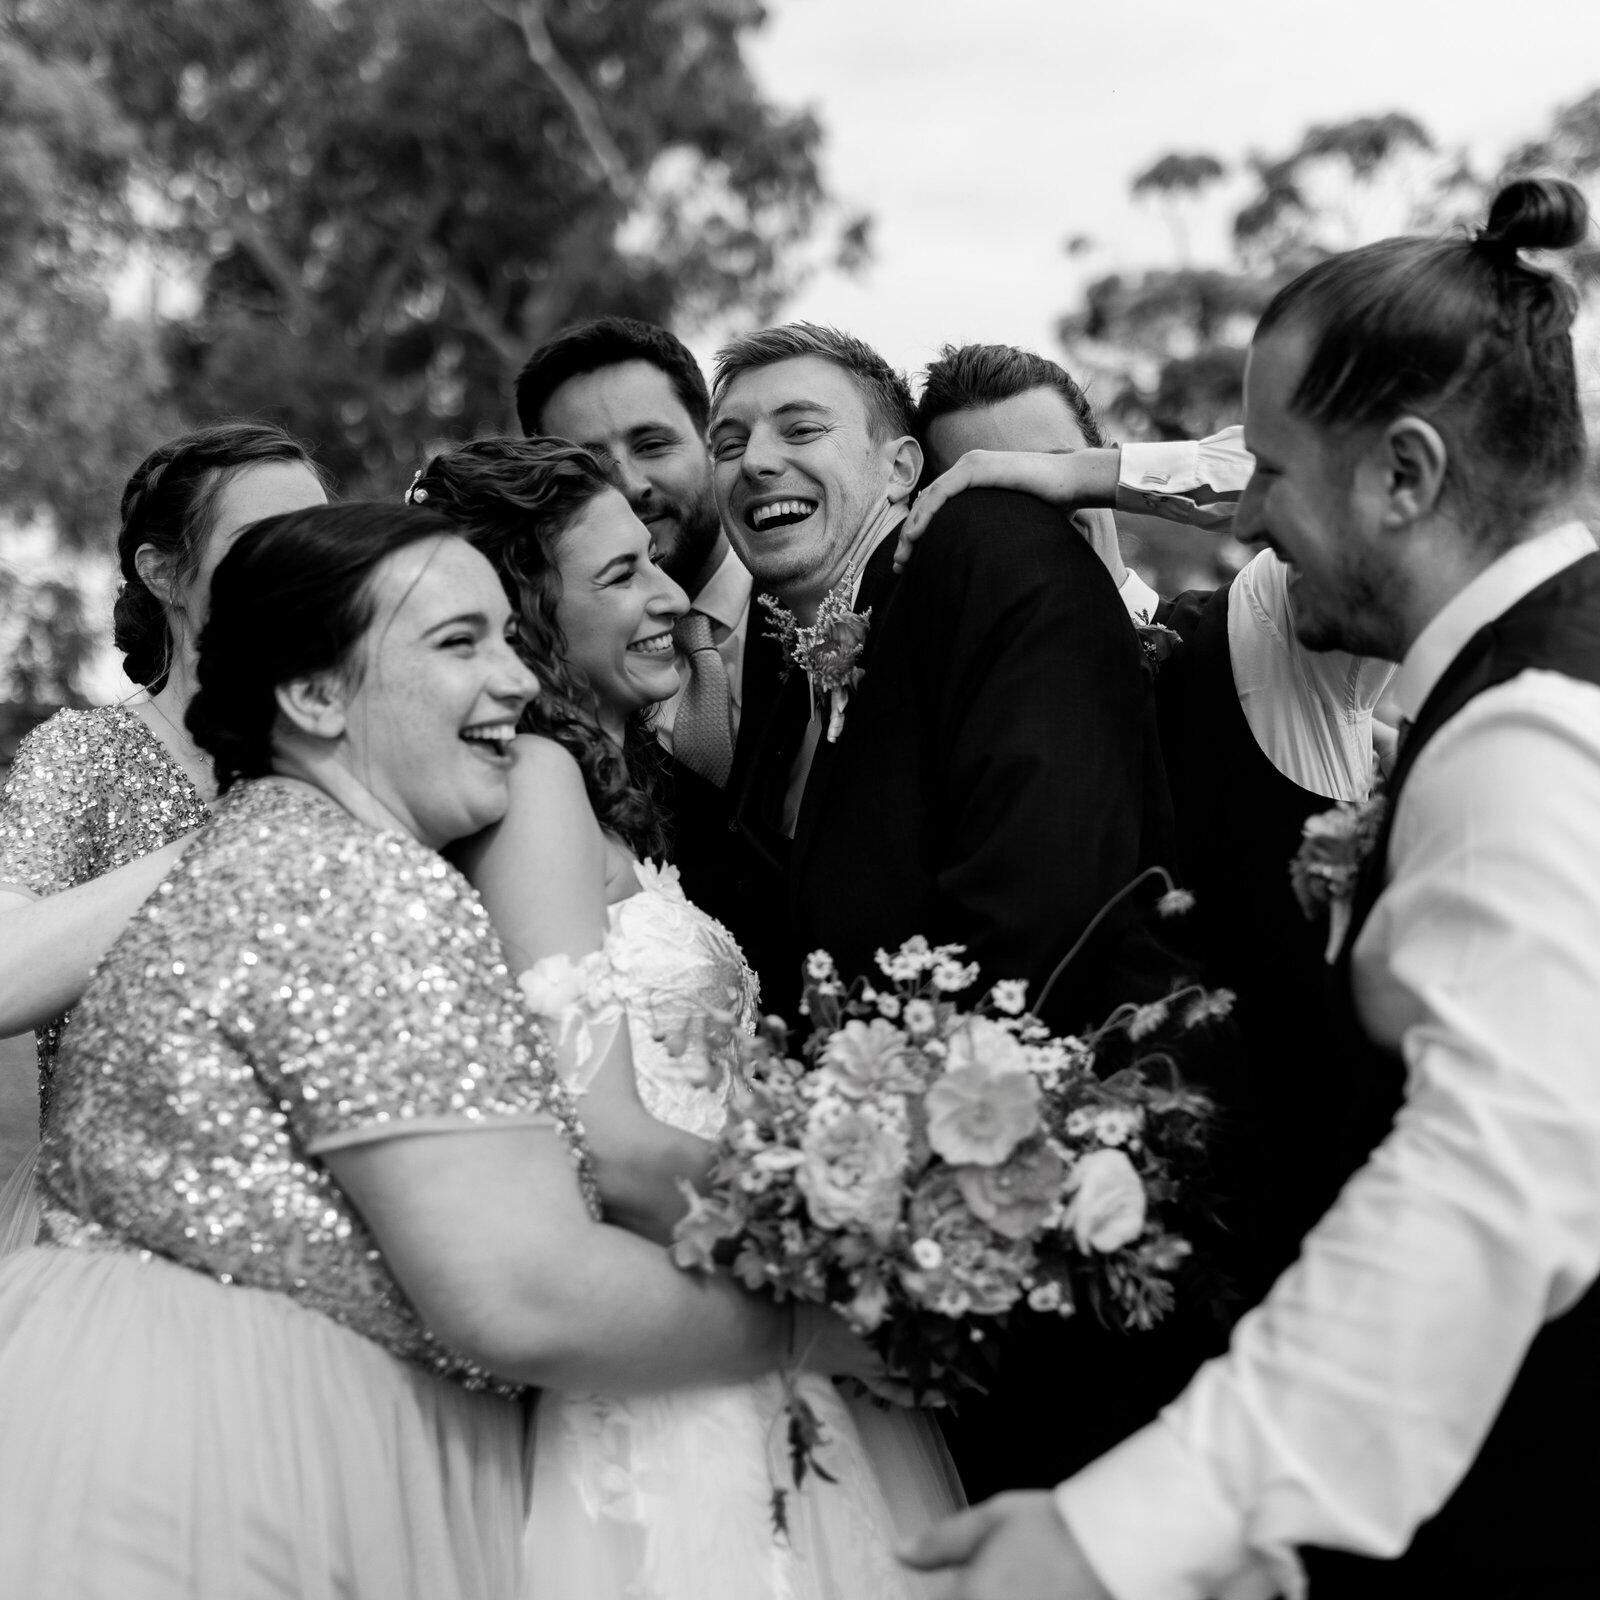 Emily-Ben-Rexvil-Photography-Adelaide-Wedding-Photographer-421